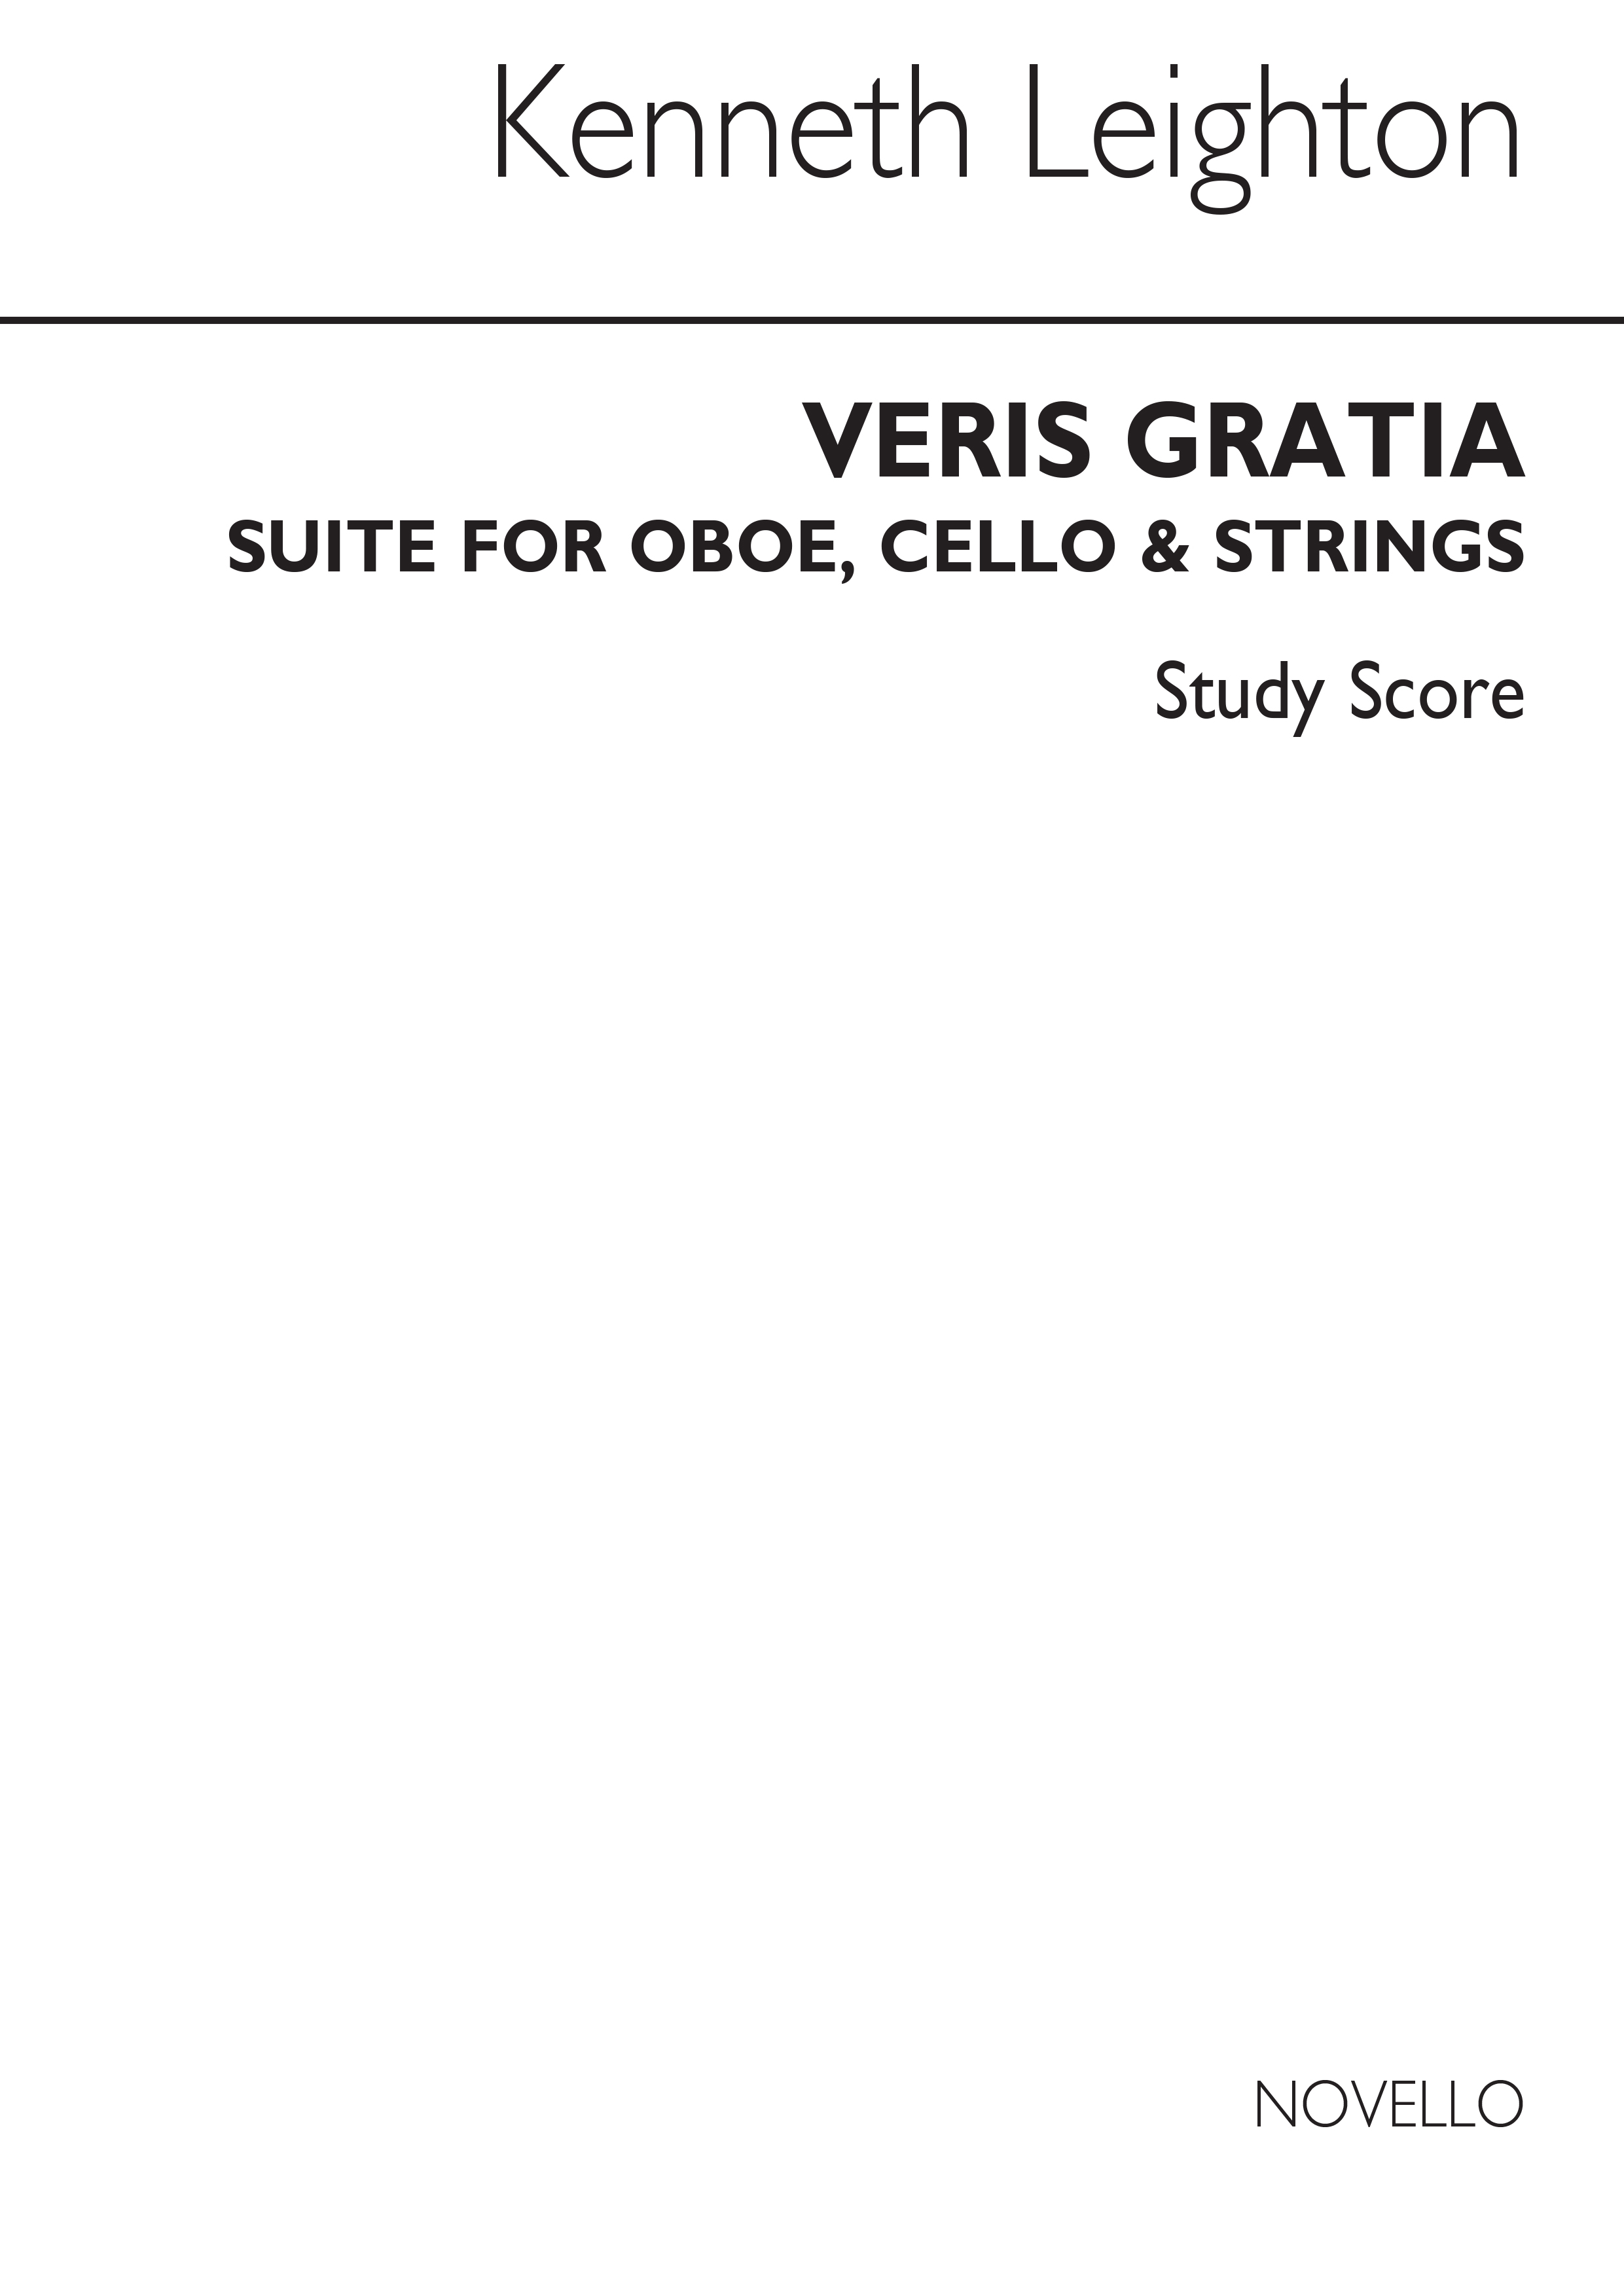 Kenneth Leighton: Veris Gratia Op. 9 (Study Score)